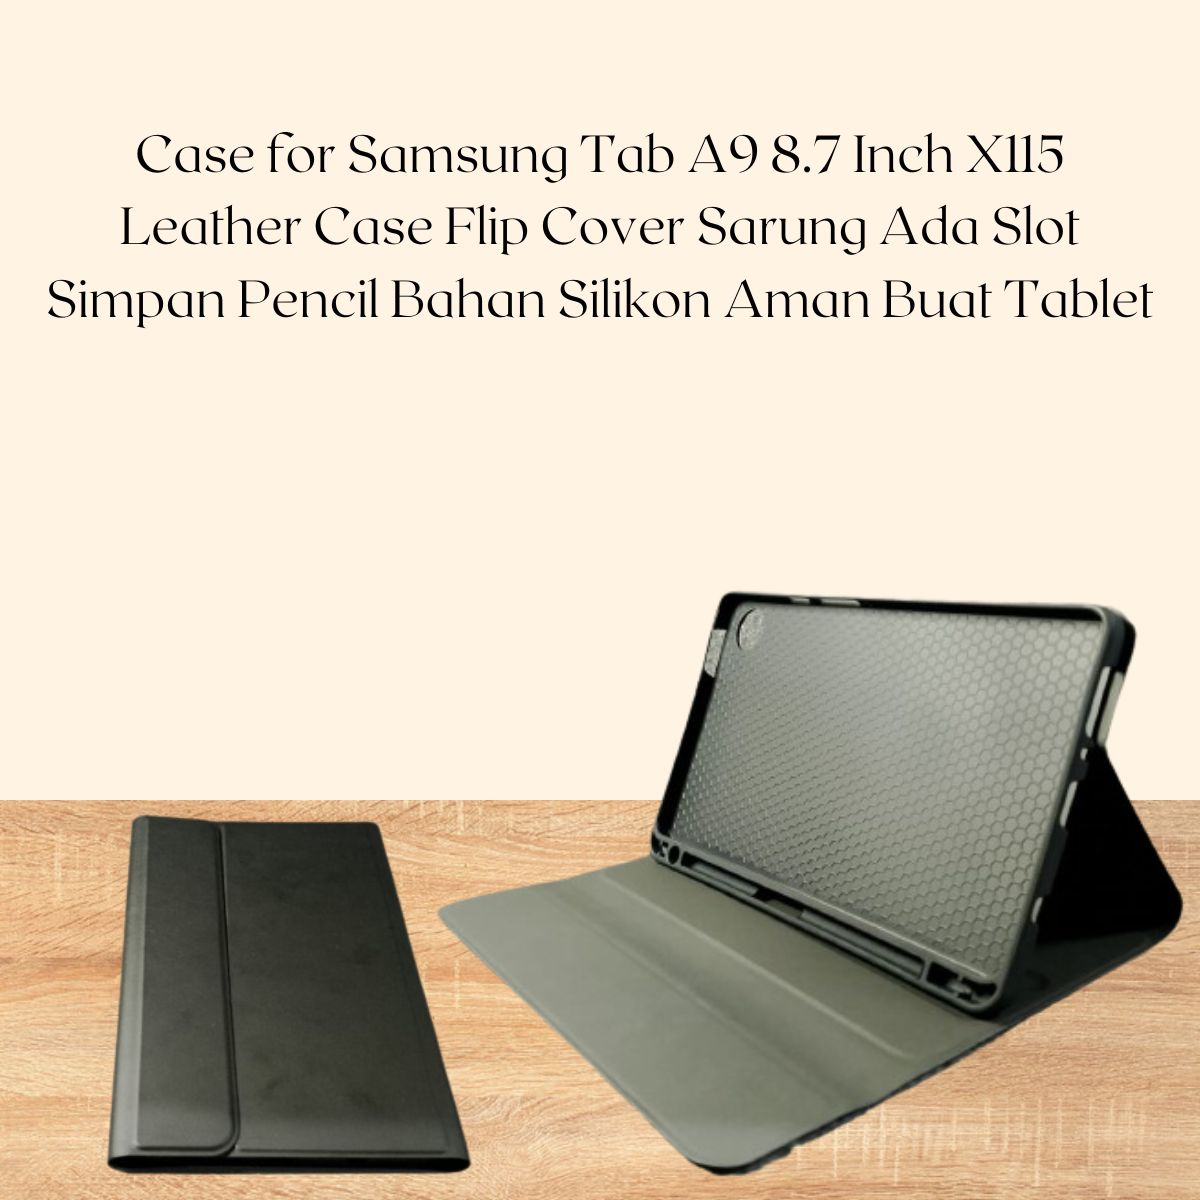 SL-03 Case for Samsung Tab A9 8.7 Inch X115 Leather Case Flip Cover Sarung Ada Slot Simpan Pencil Bahan Silikon Aman Buat Tablet